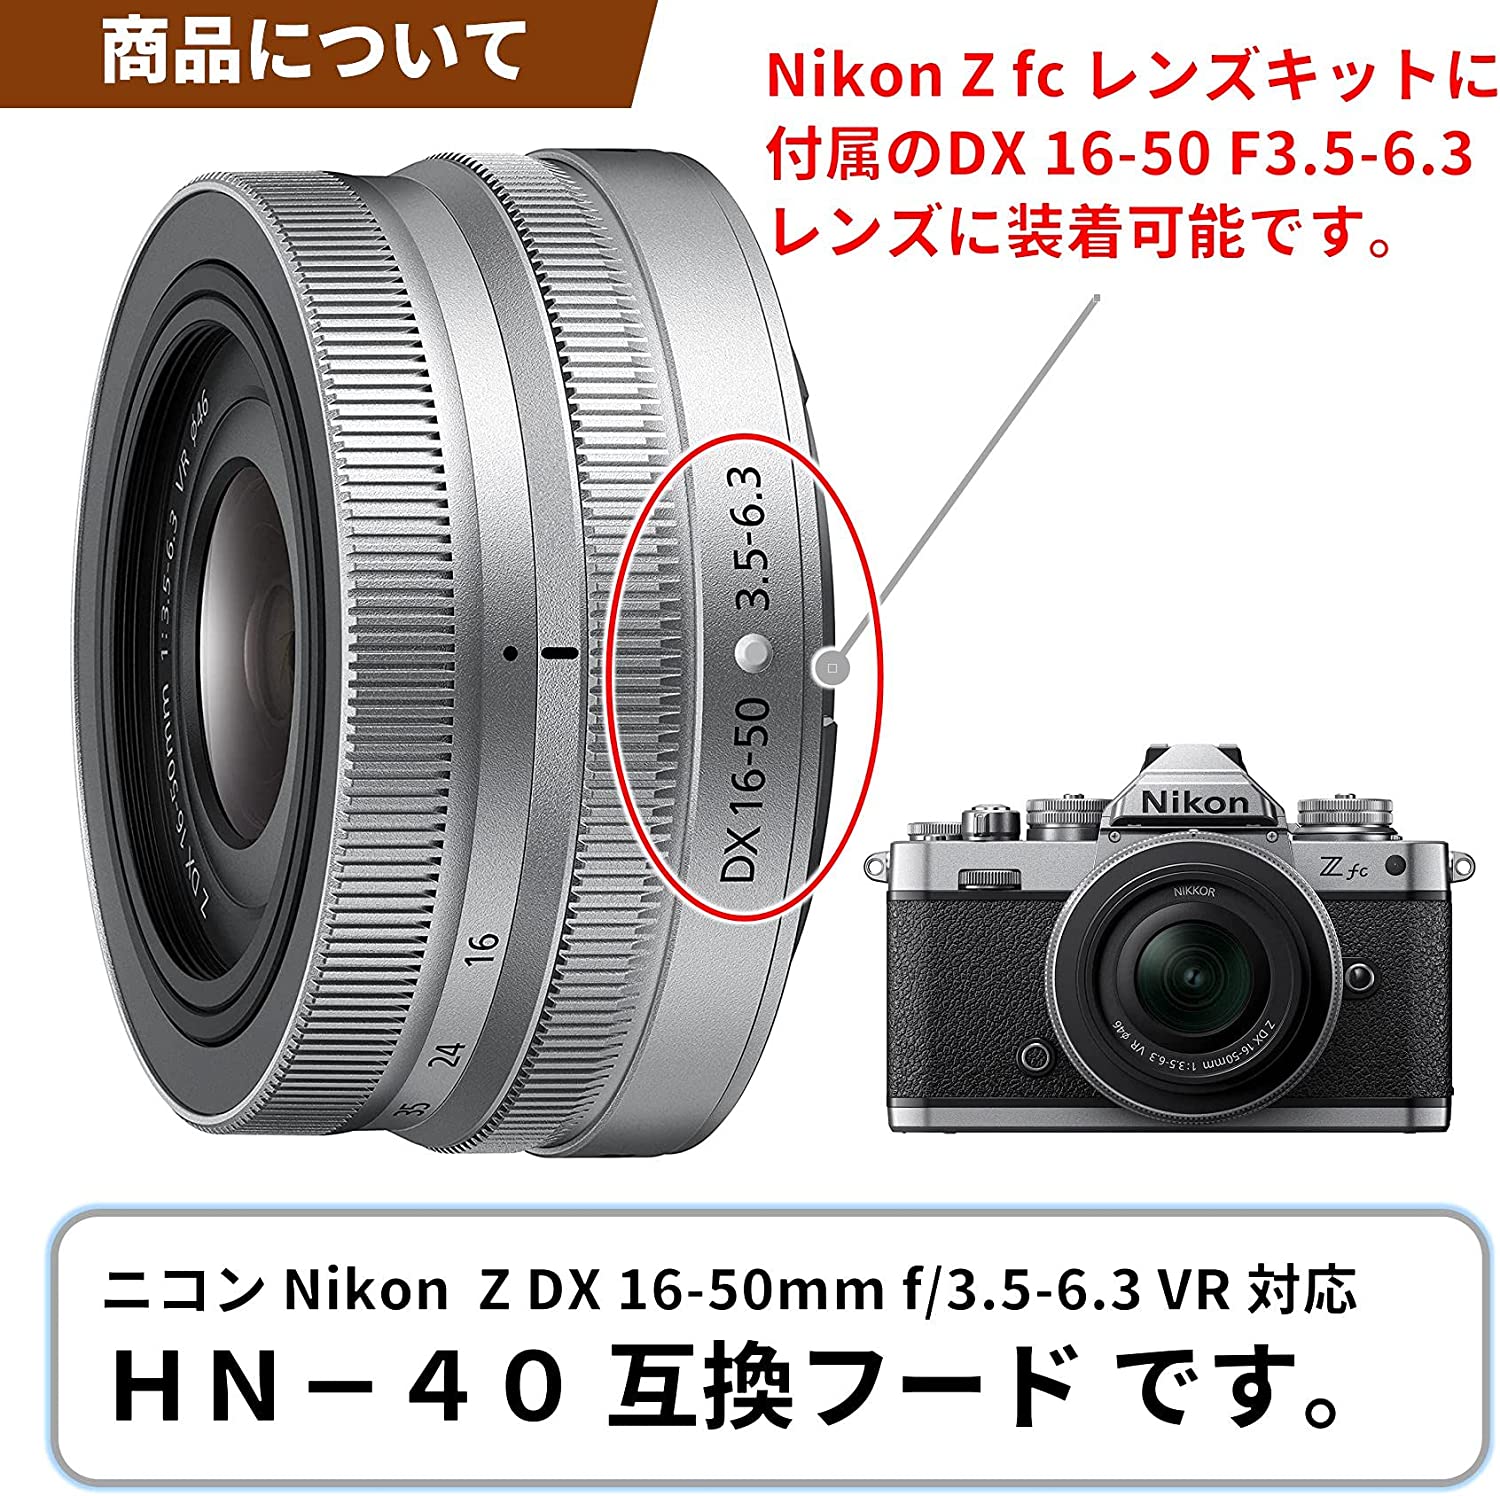 F-Foto  レンズフード HN-40 シルバー  (対象レンズ: ニコン Z DX 16-50mm f/3.5-6.3 VR) エフフォト